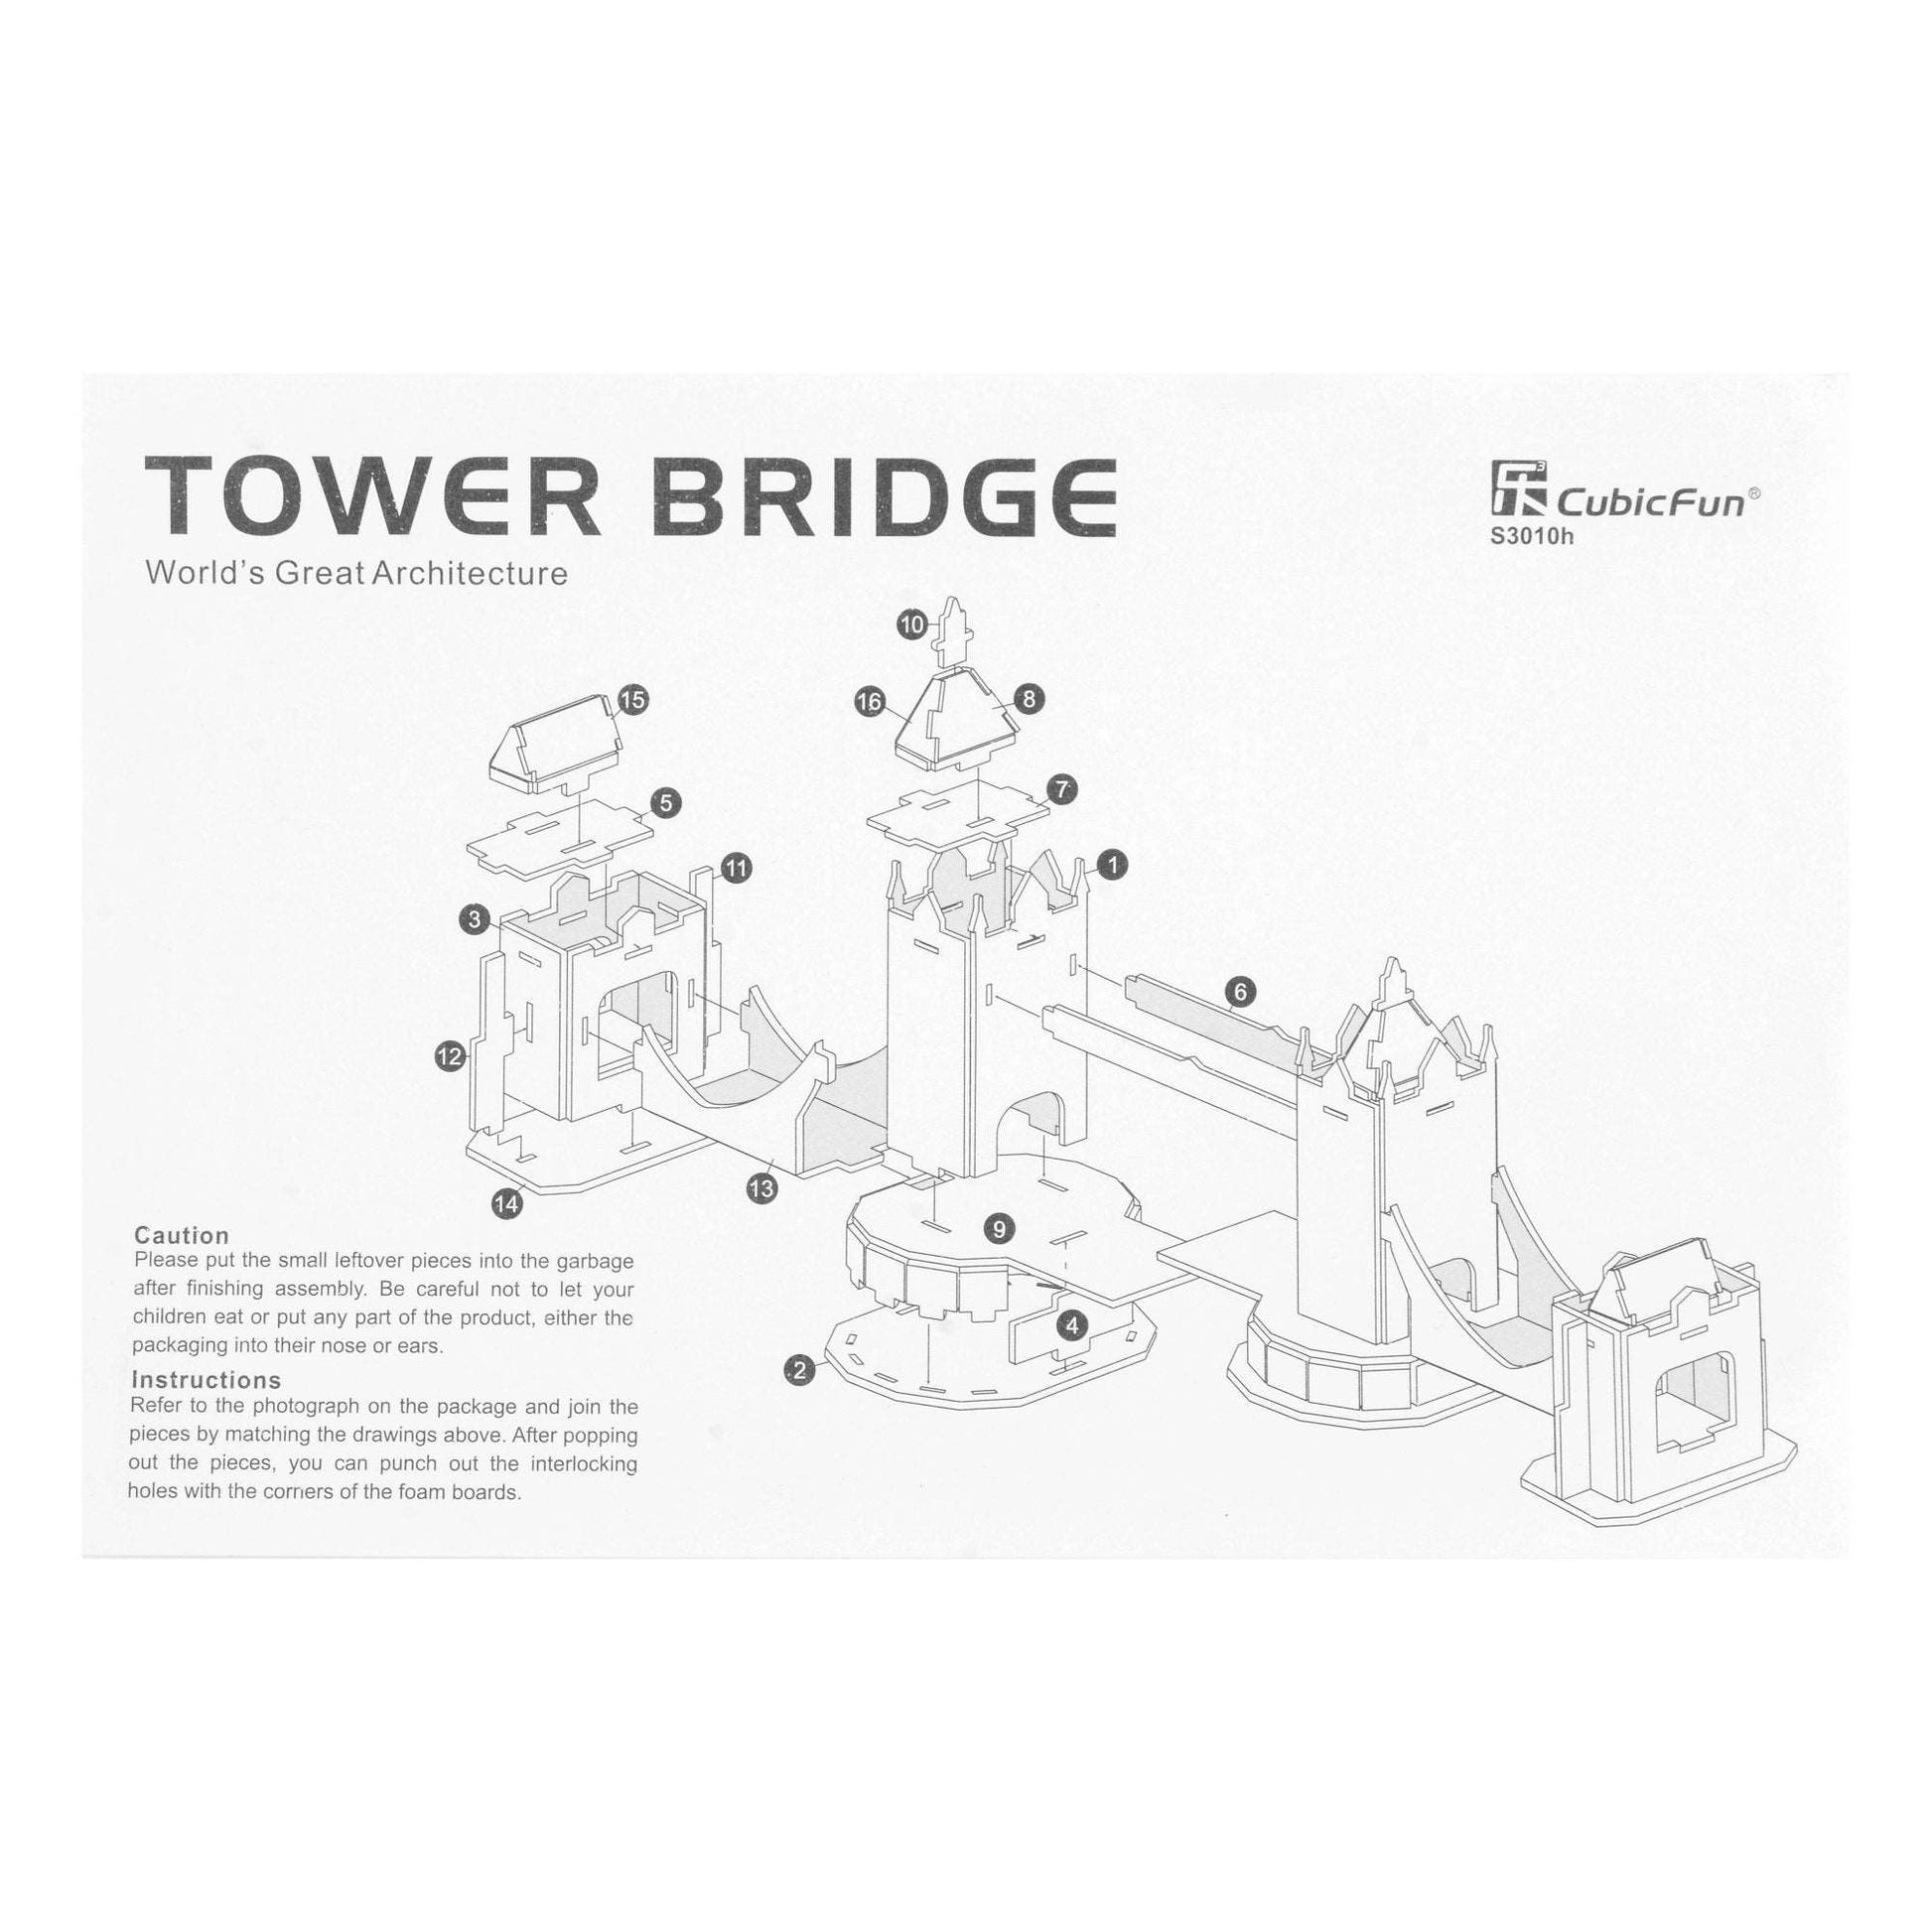 3D Tower Bridge Jigsaw 32pcs freeshipping - GeorgiePorgy